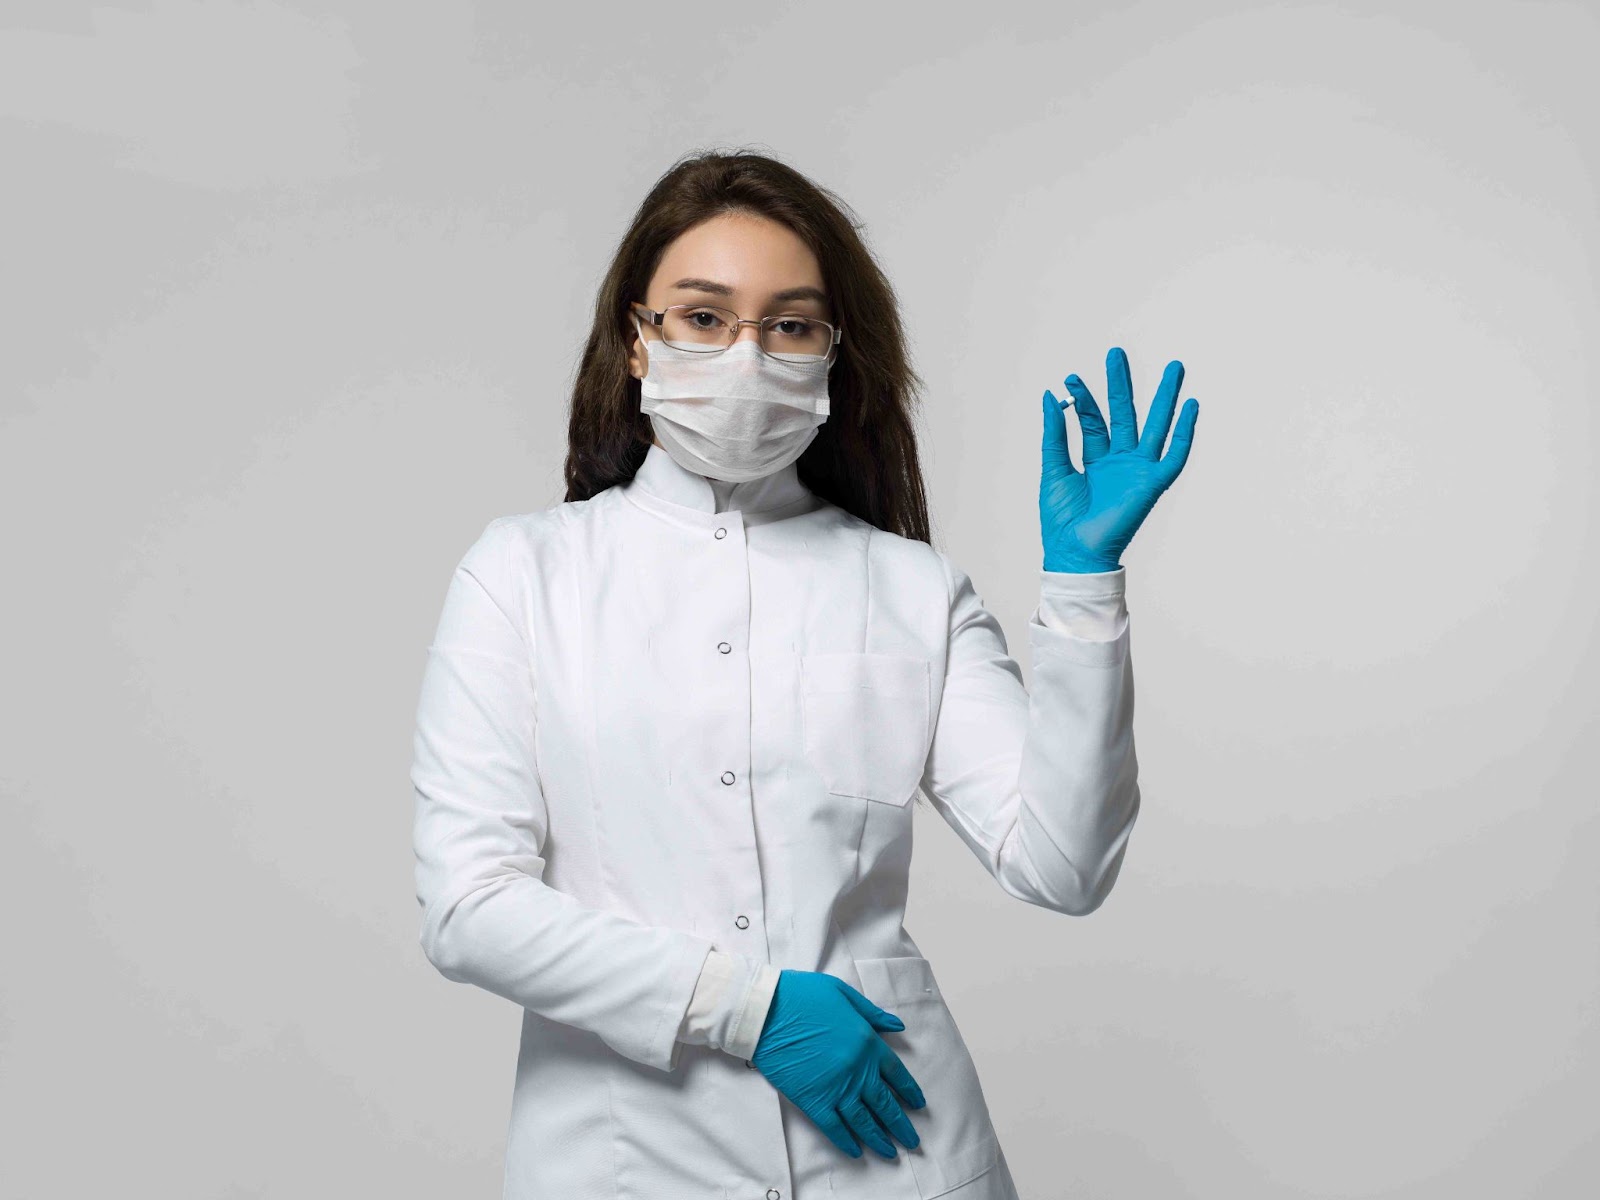 dr glover